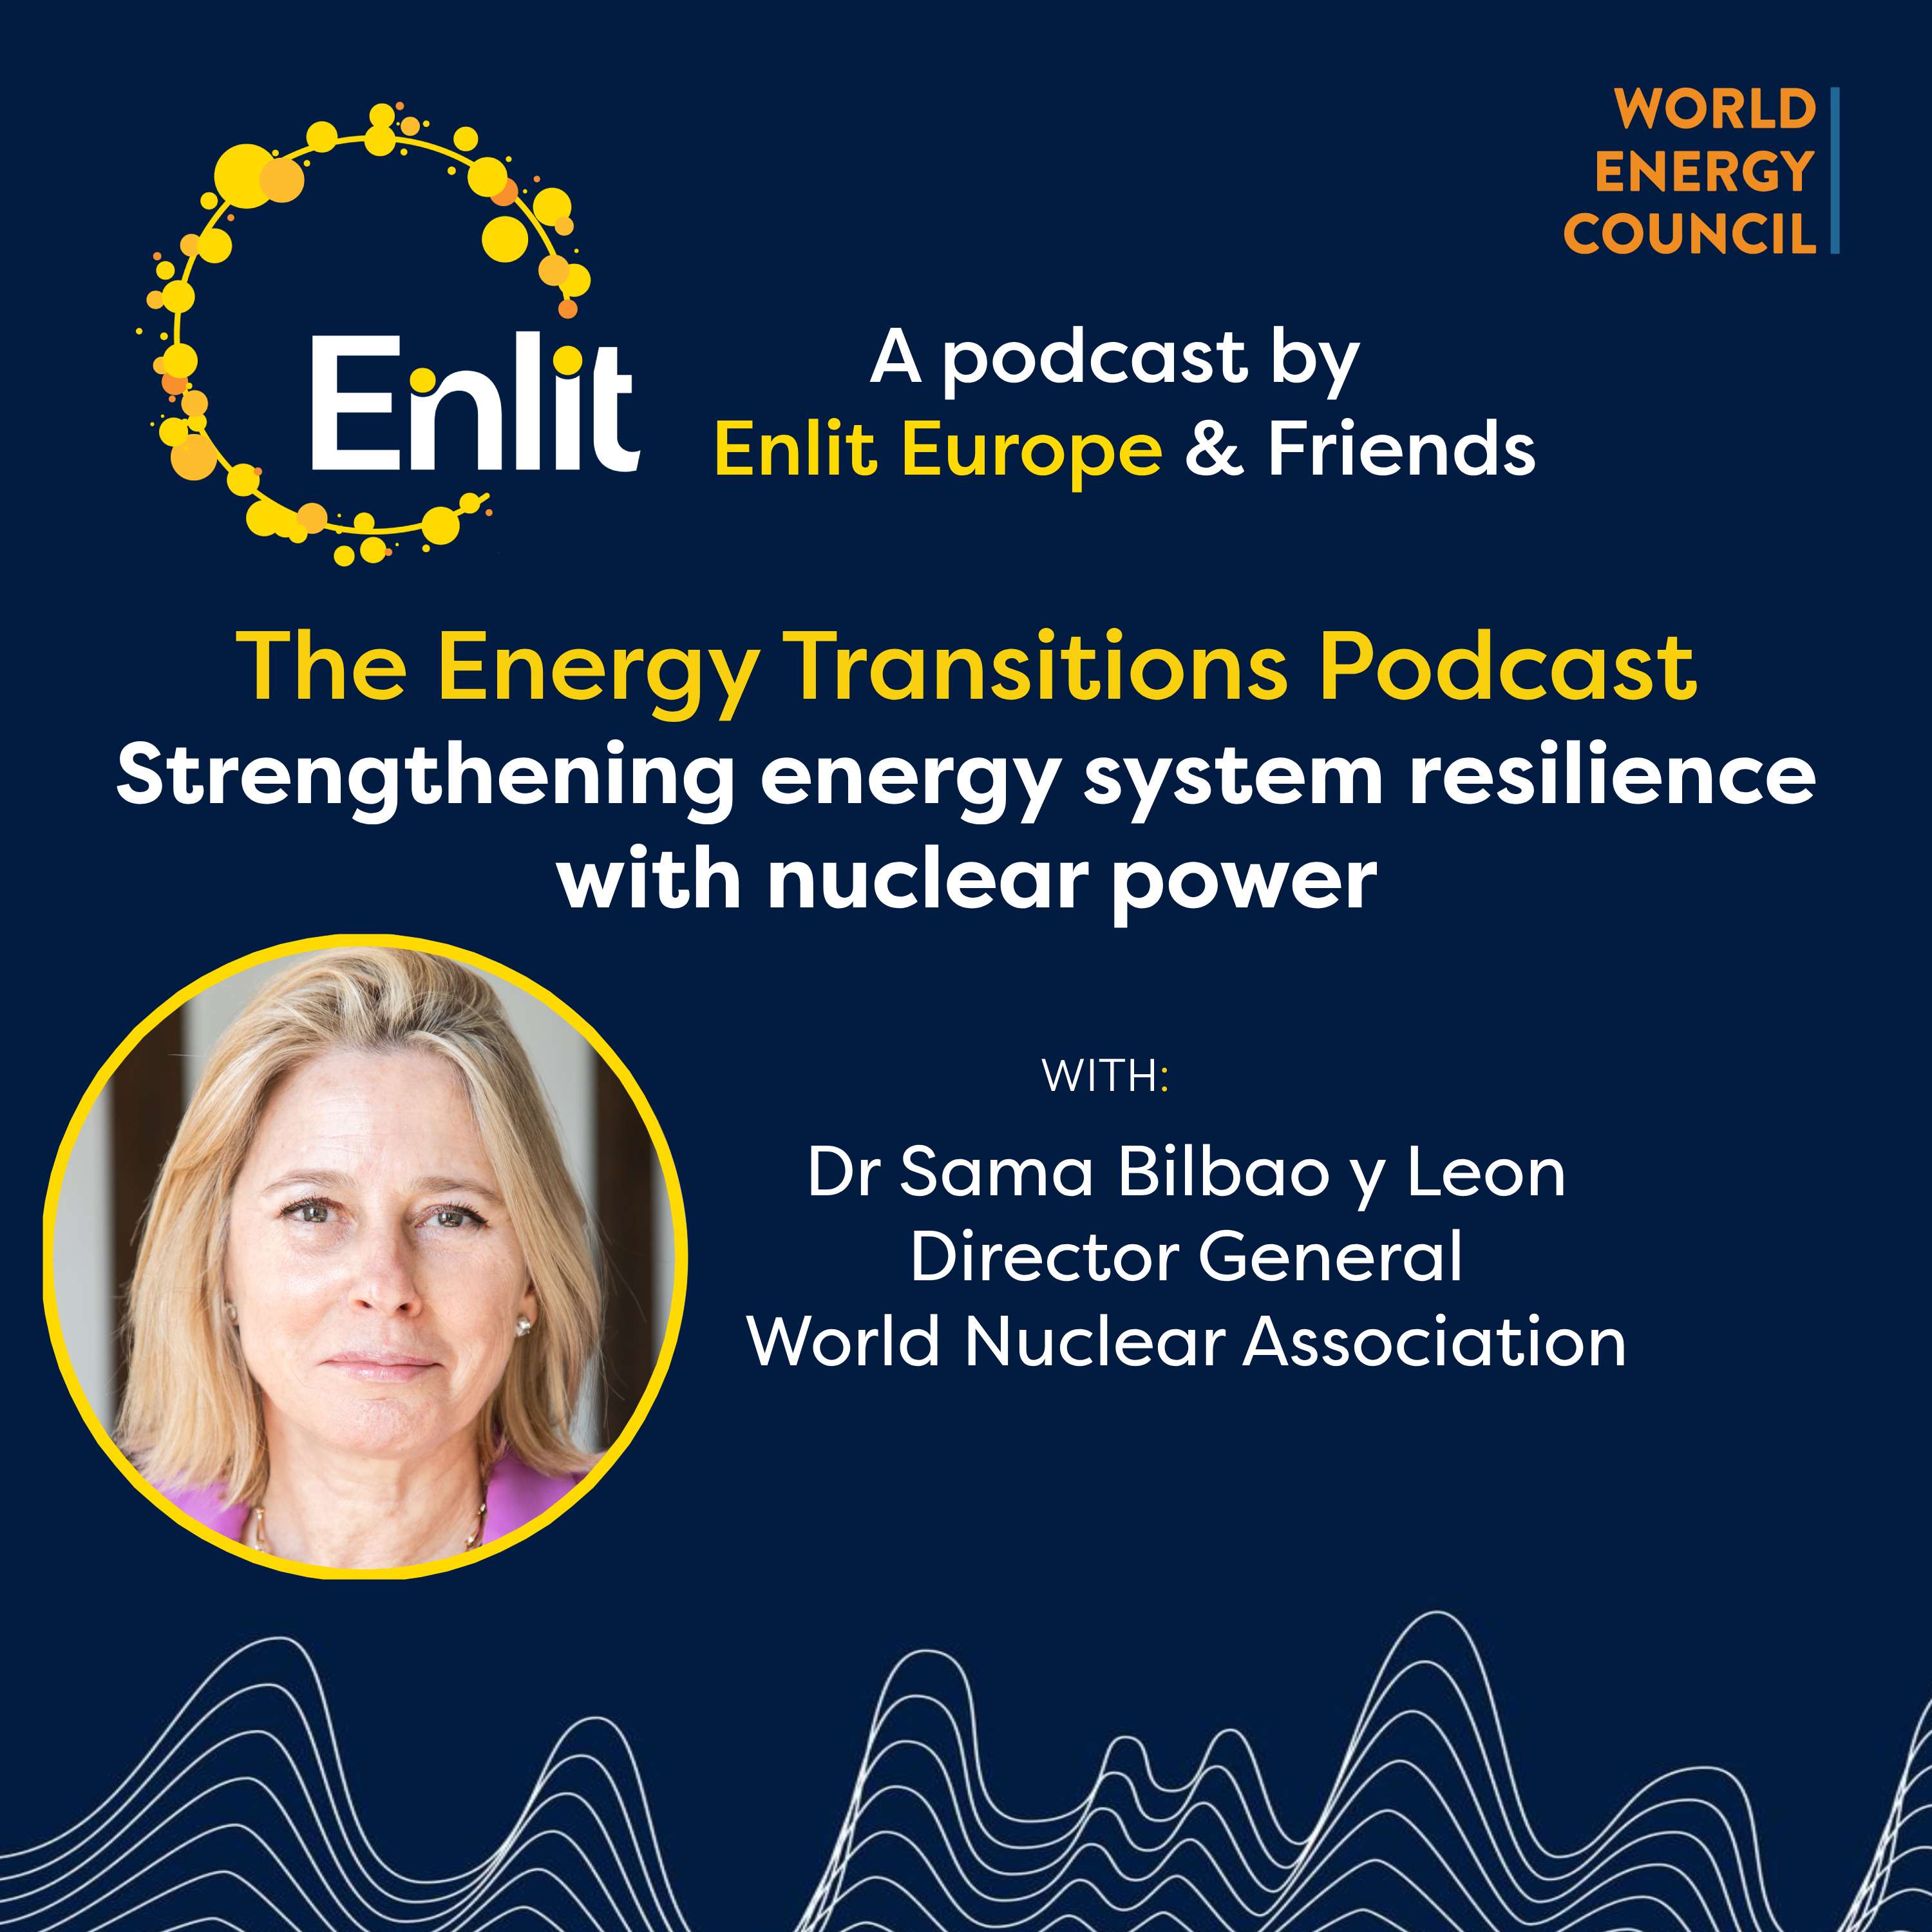 Dr Sama Bilbao y Leon - Strengthening energy system resilience through nuclear power